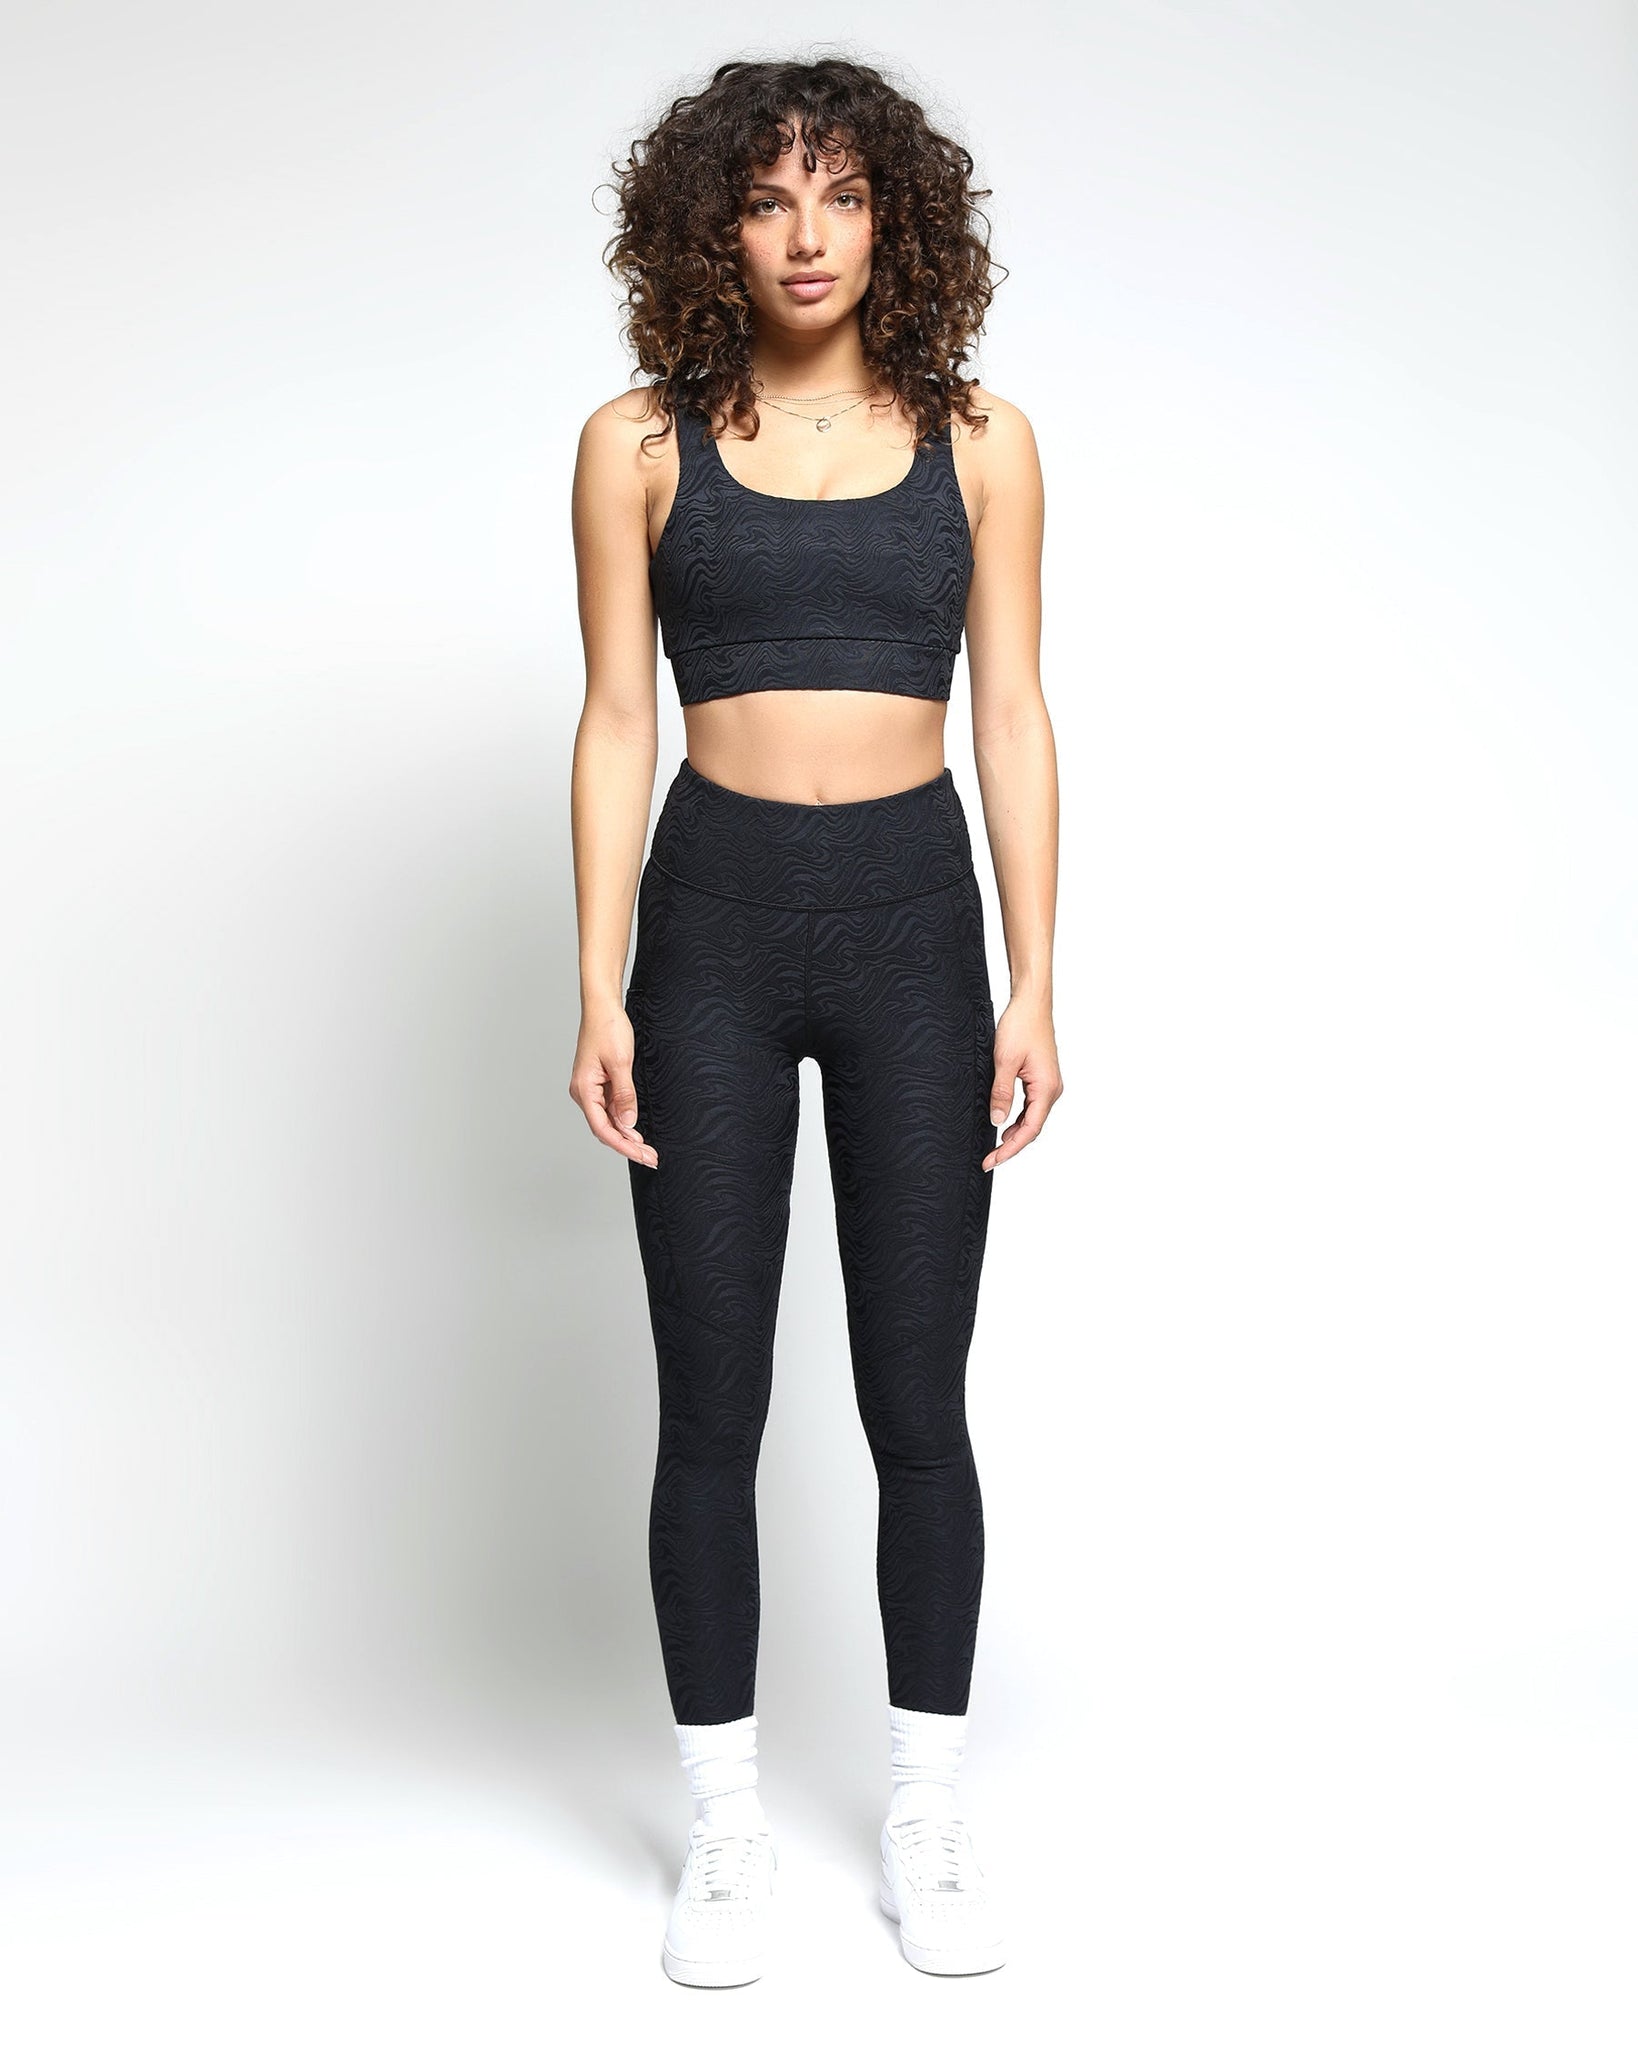 NERO, Nero Sports Bra & Tights - Black: Activewear, Women's Yoga & Gym  Clothes, FitnessApparelExpress.com ♡…